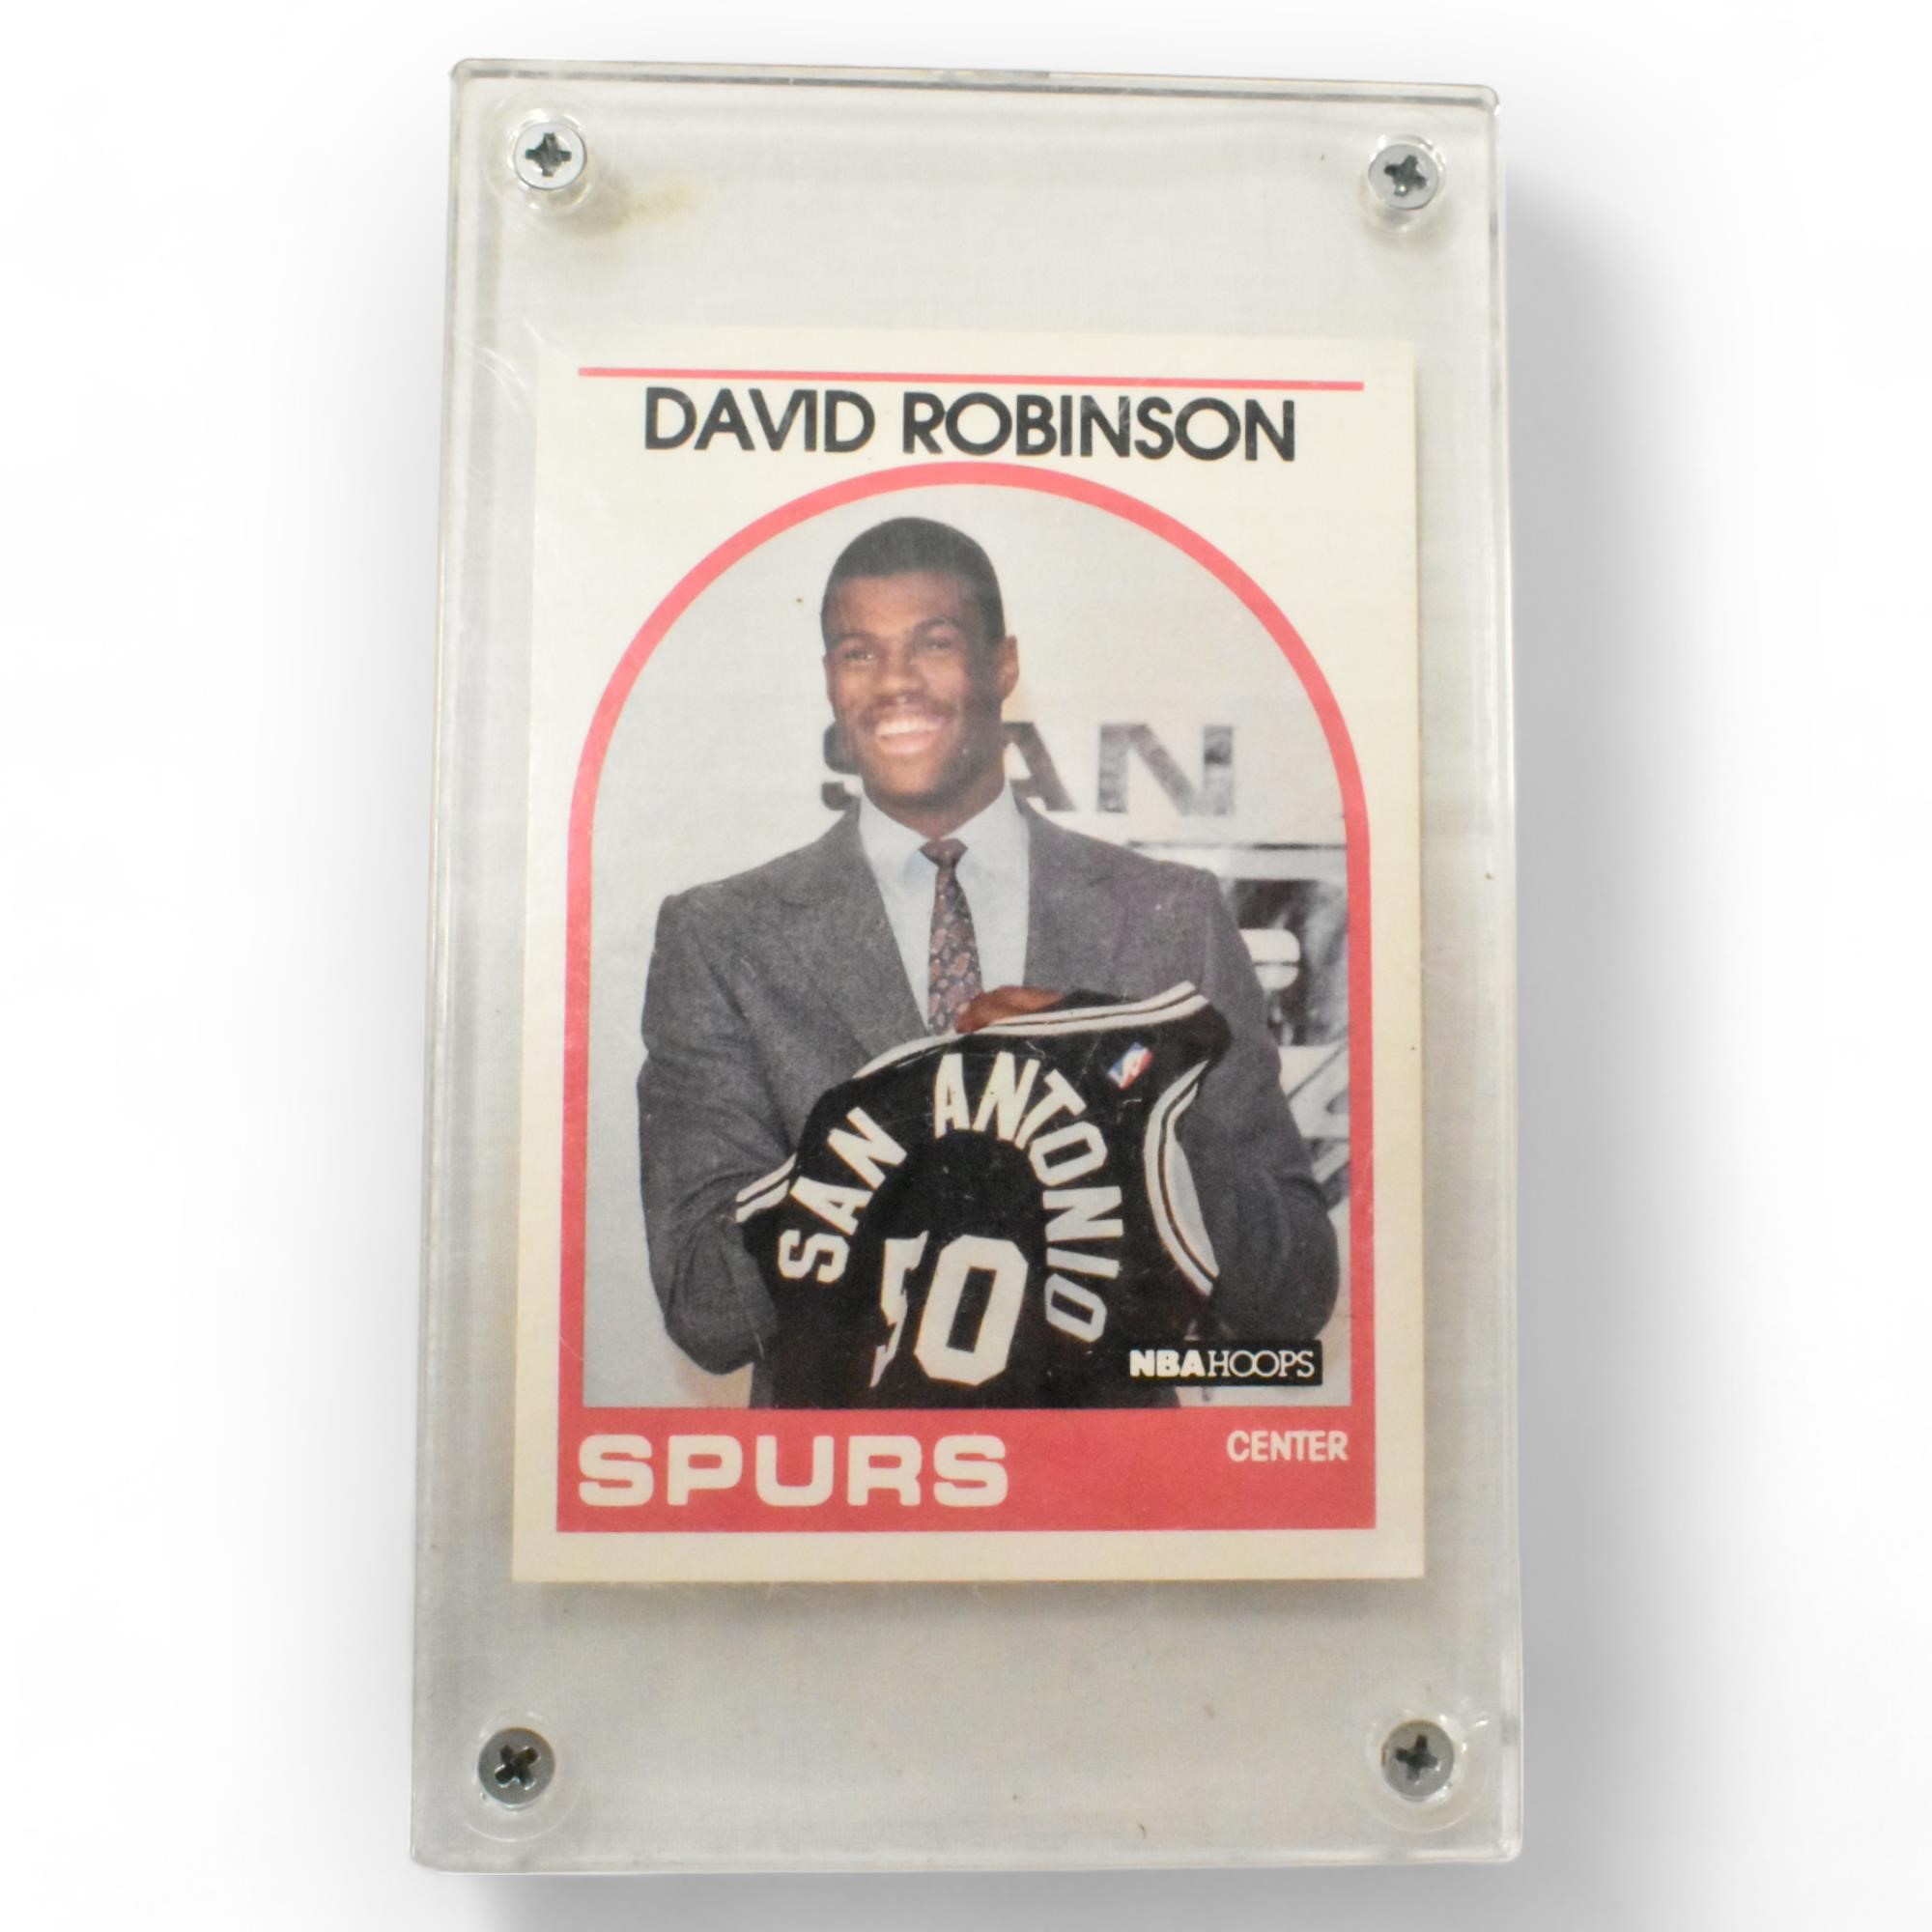 1989 David Robinson Center Spurs